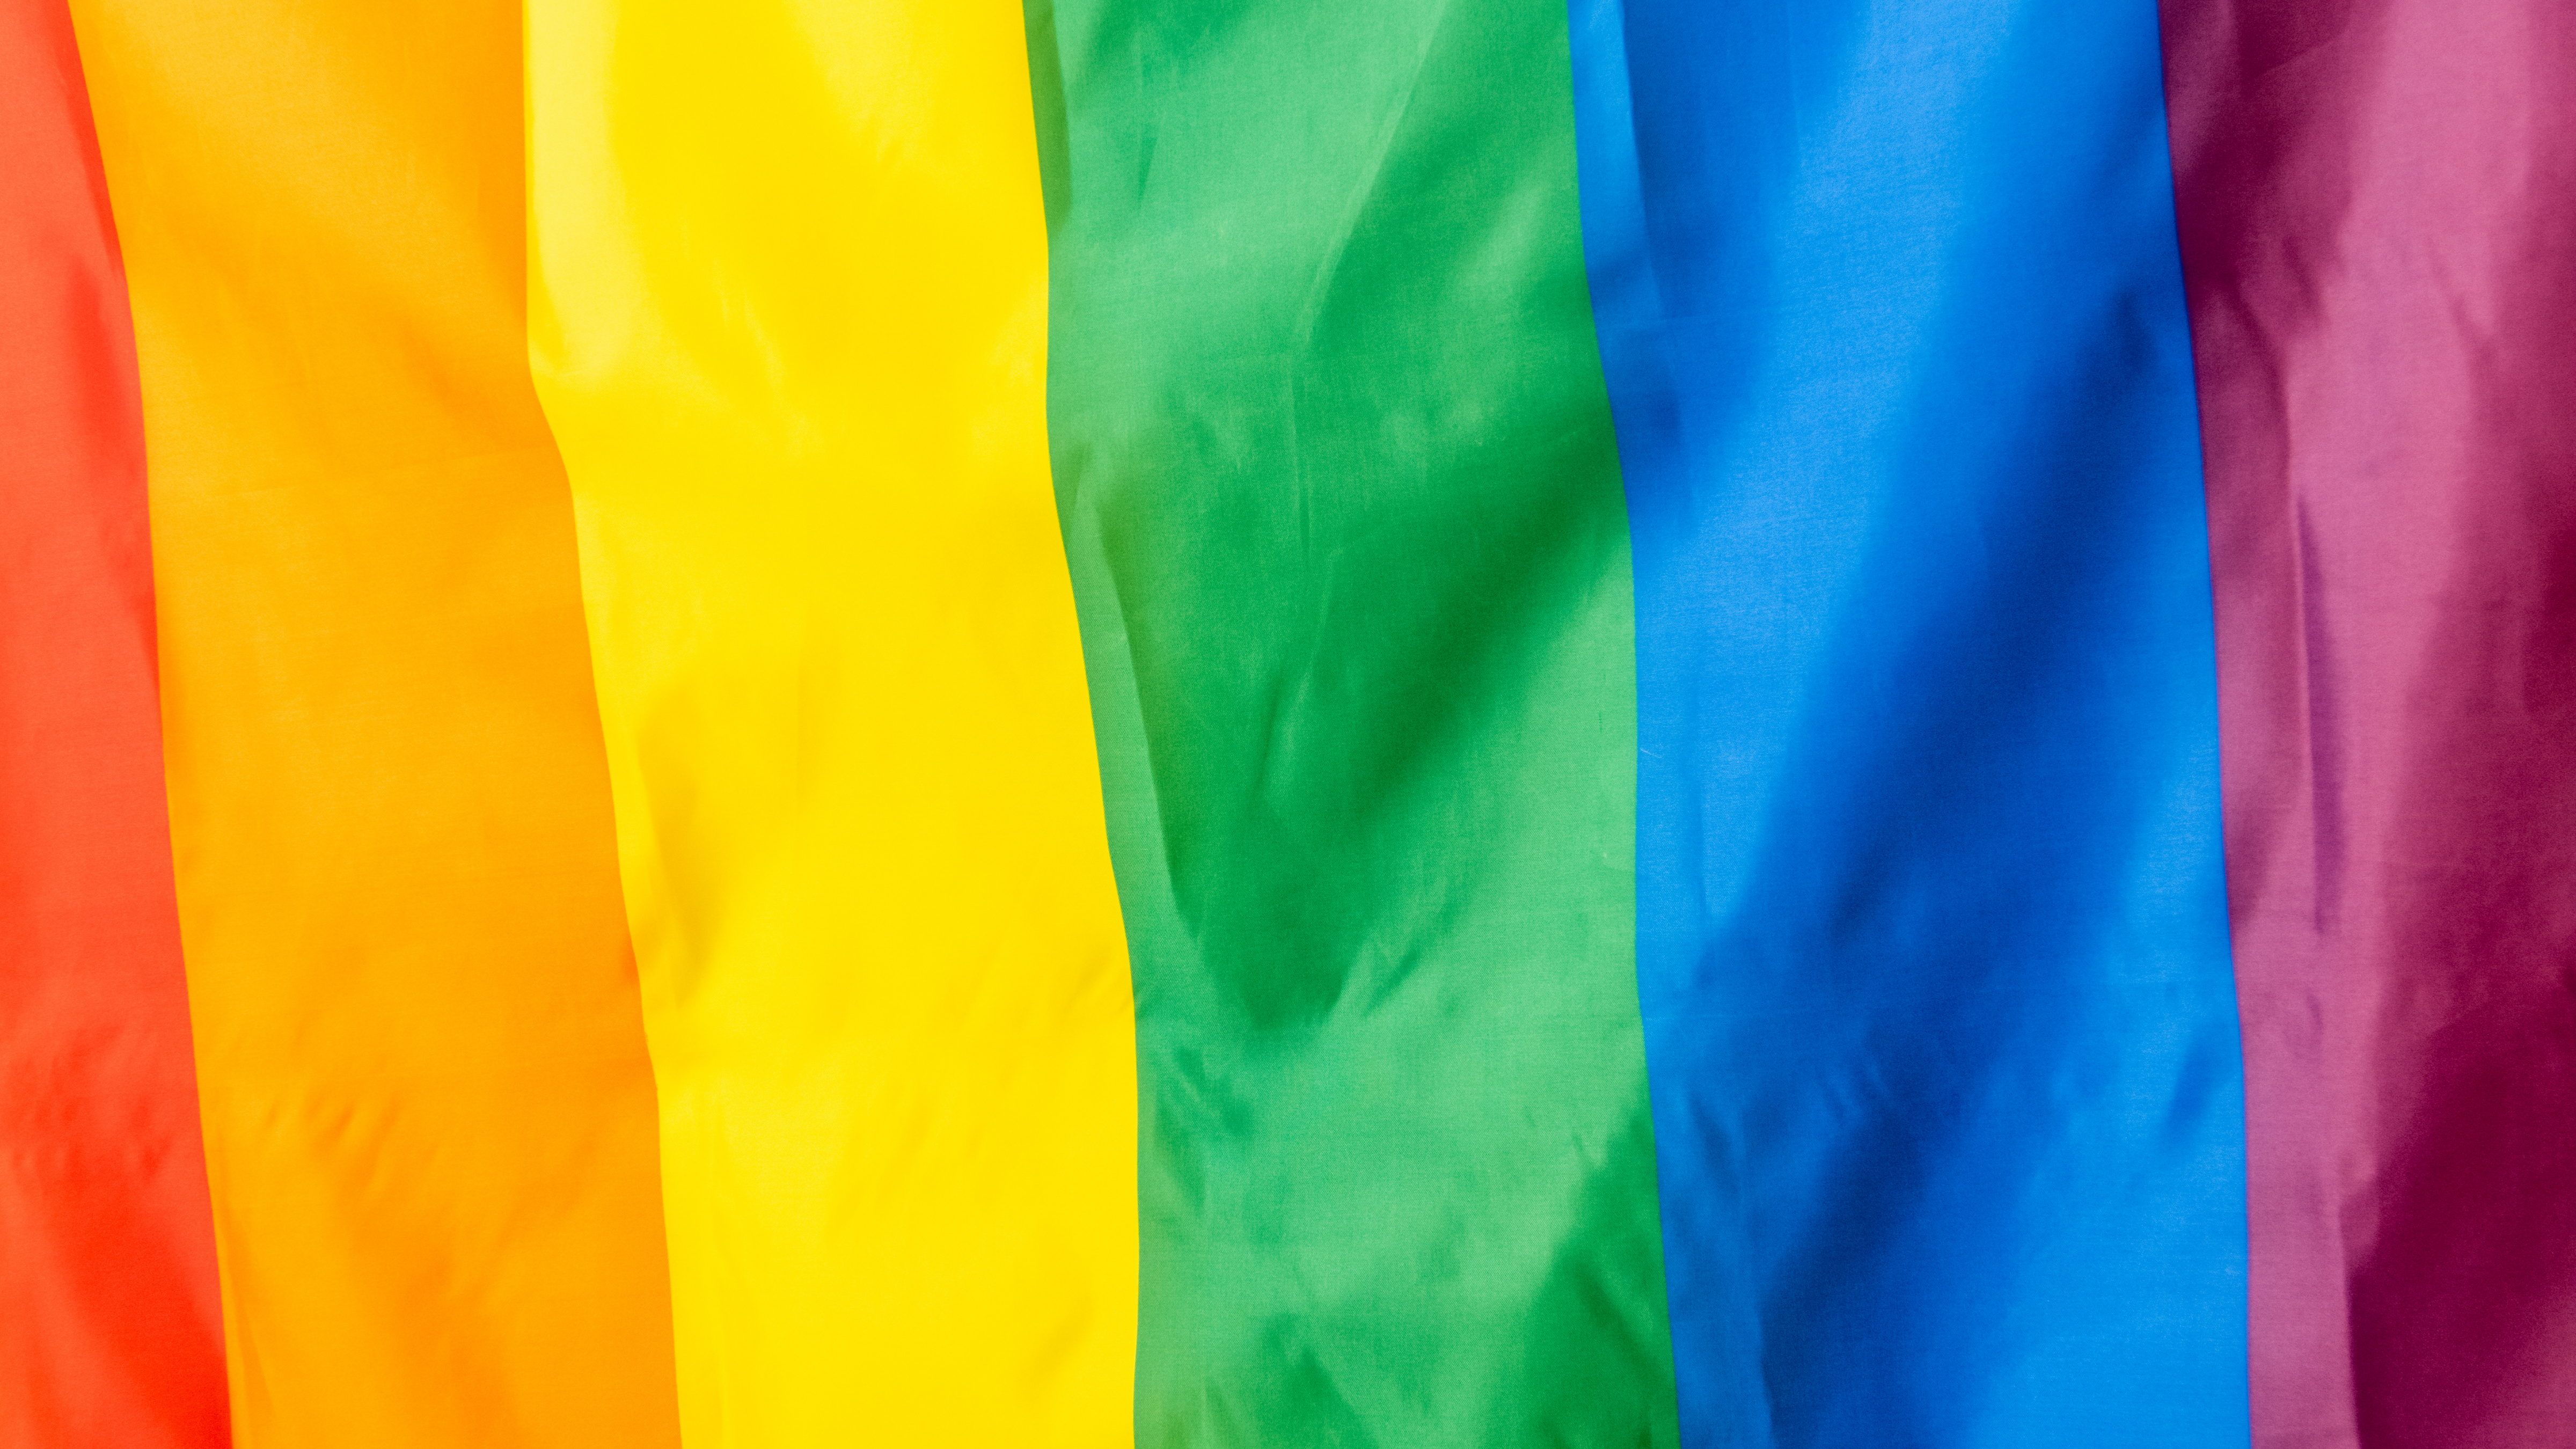 Close up image of the LGBTQ Rainbow flag